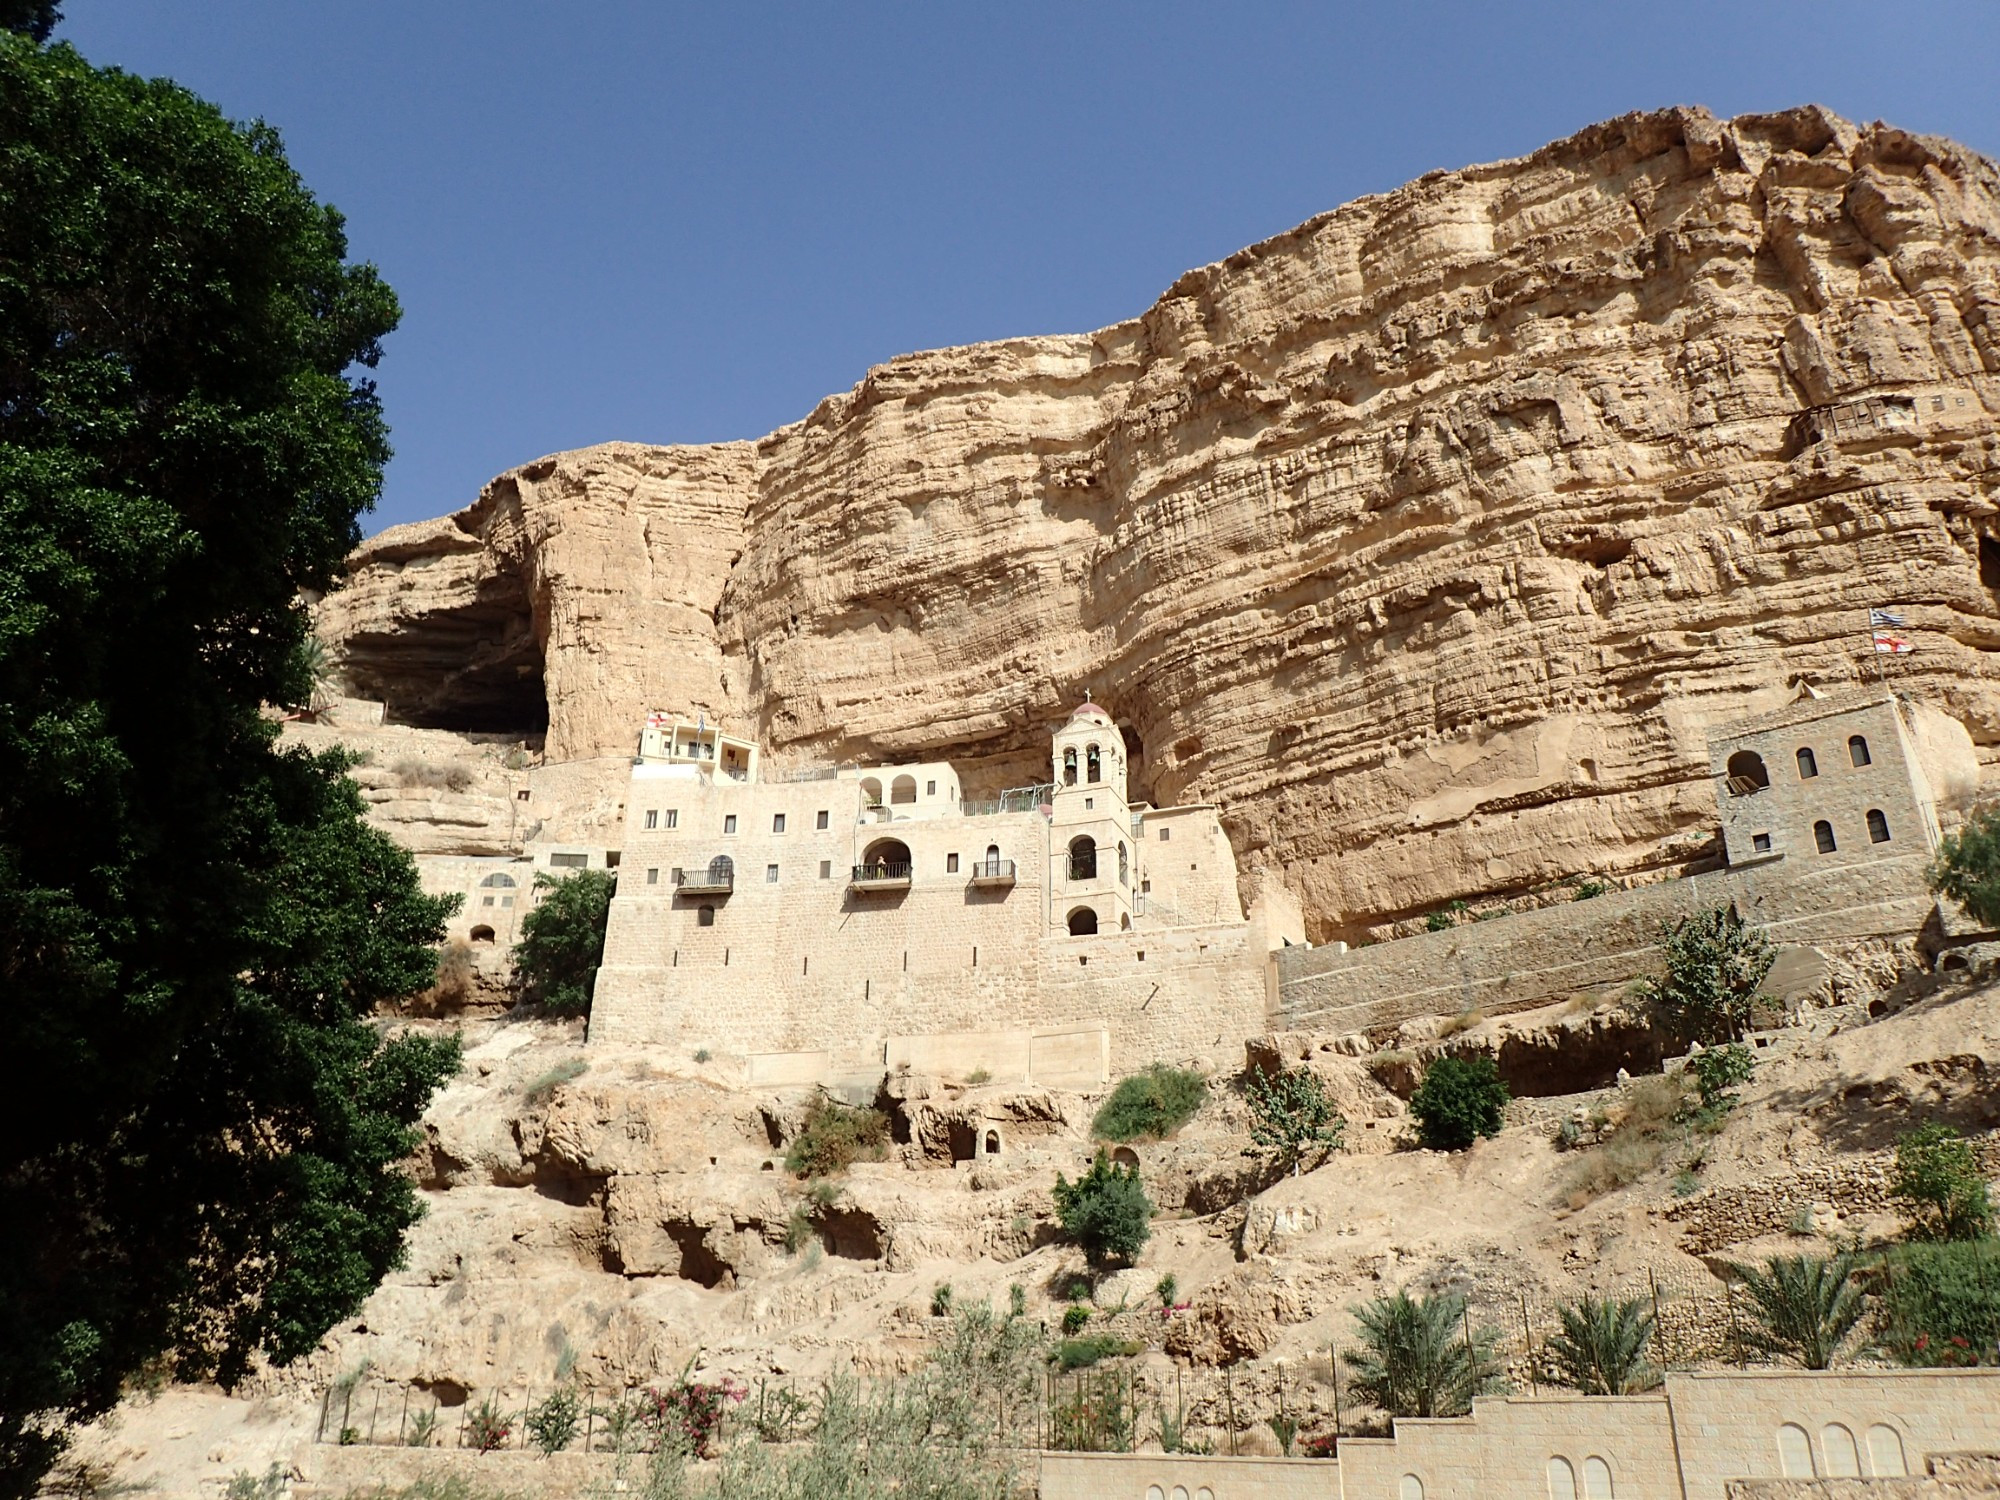 St George's Monastery, Palestine